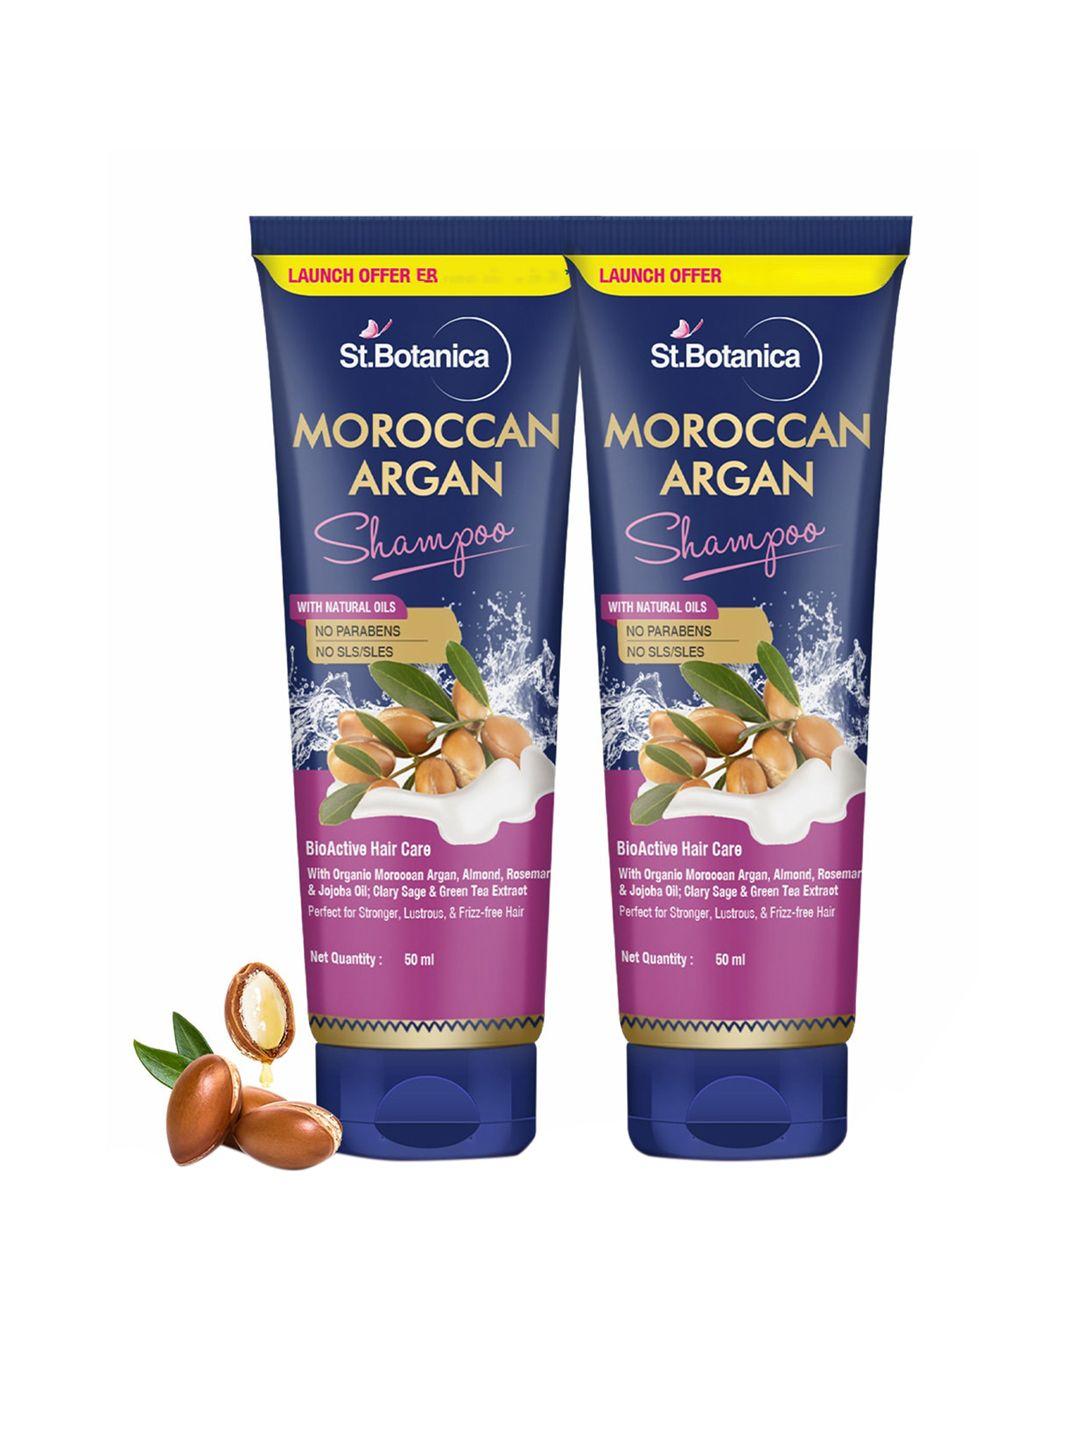 st.botanica moroccan argan set of 2 hair shampoo & conditioner 50 ml each